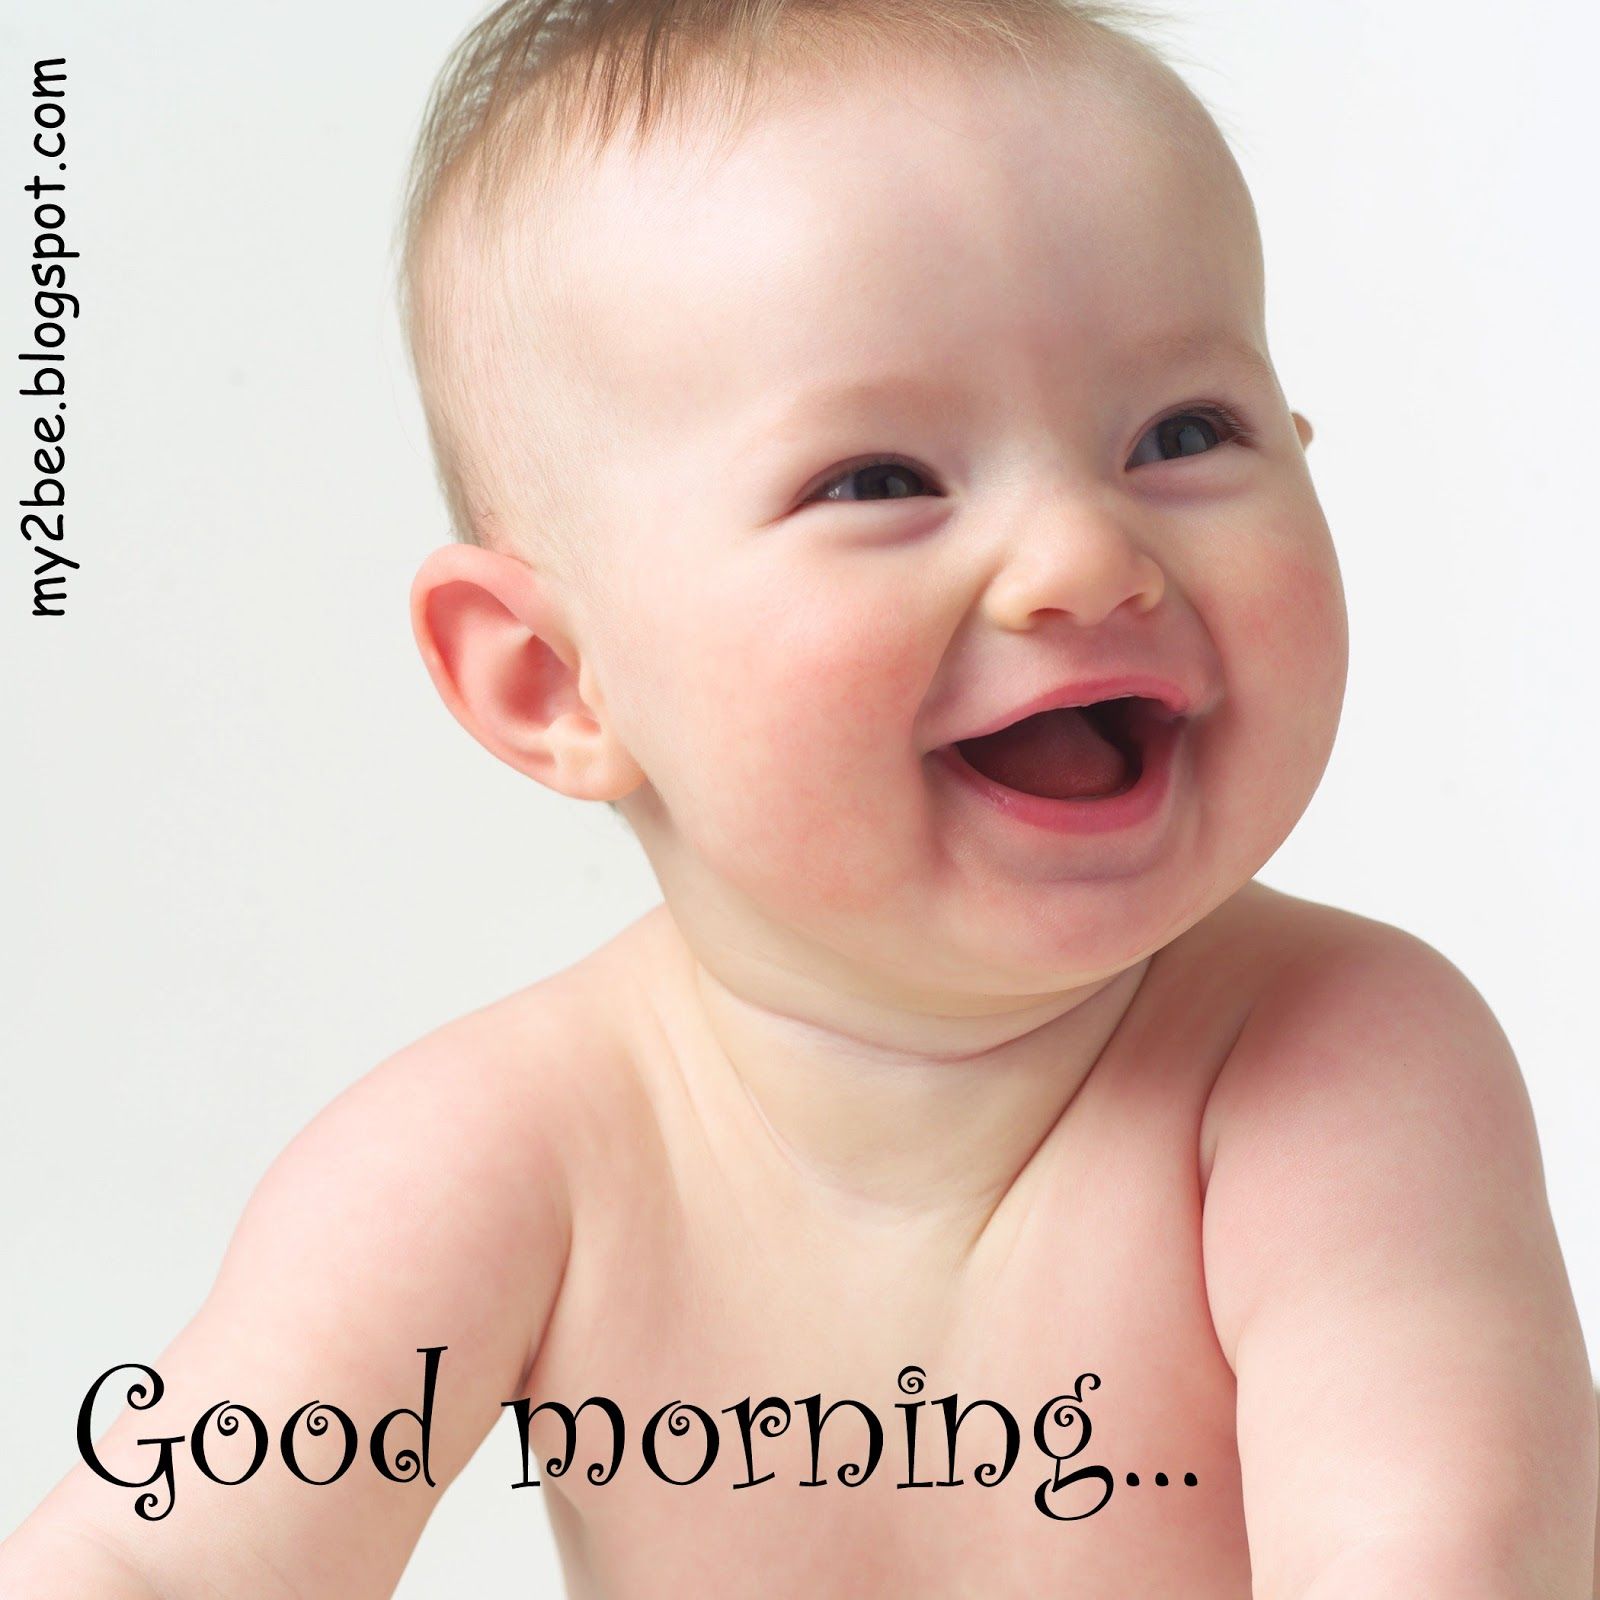 Cute Babies Saying Good Morning Image. Cute Baby Wallpaper